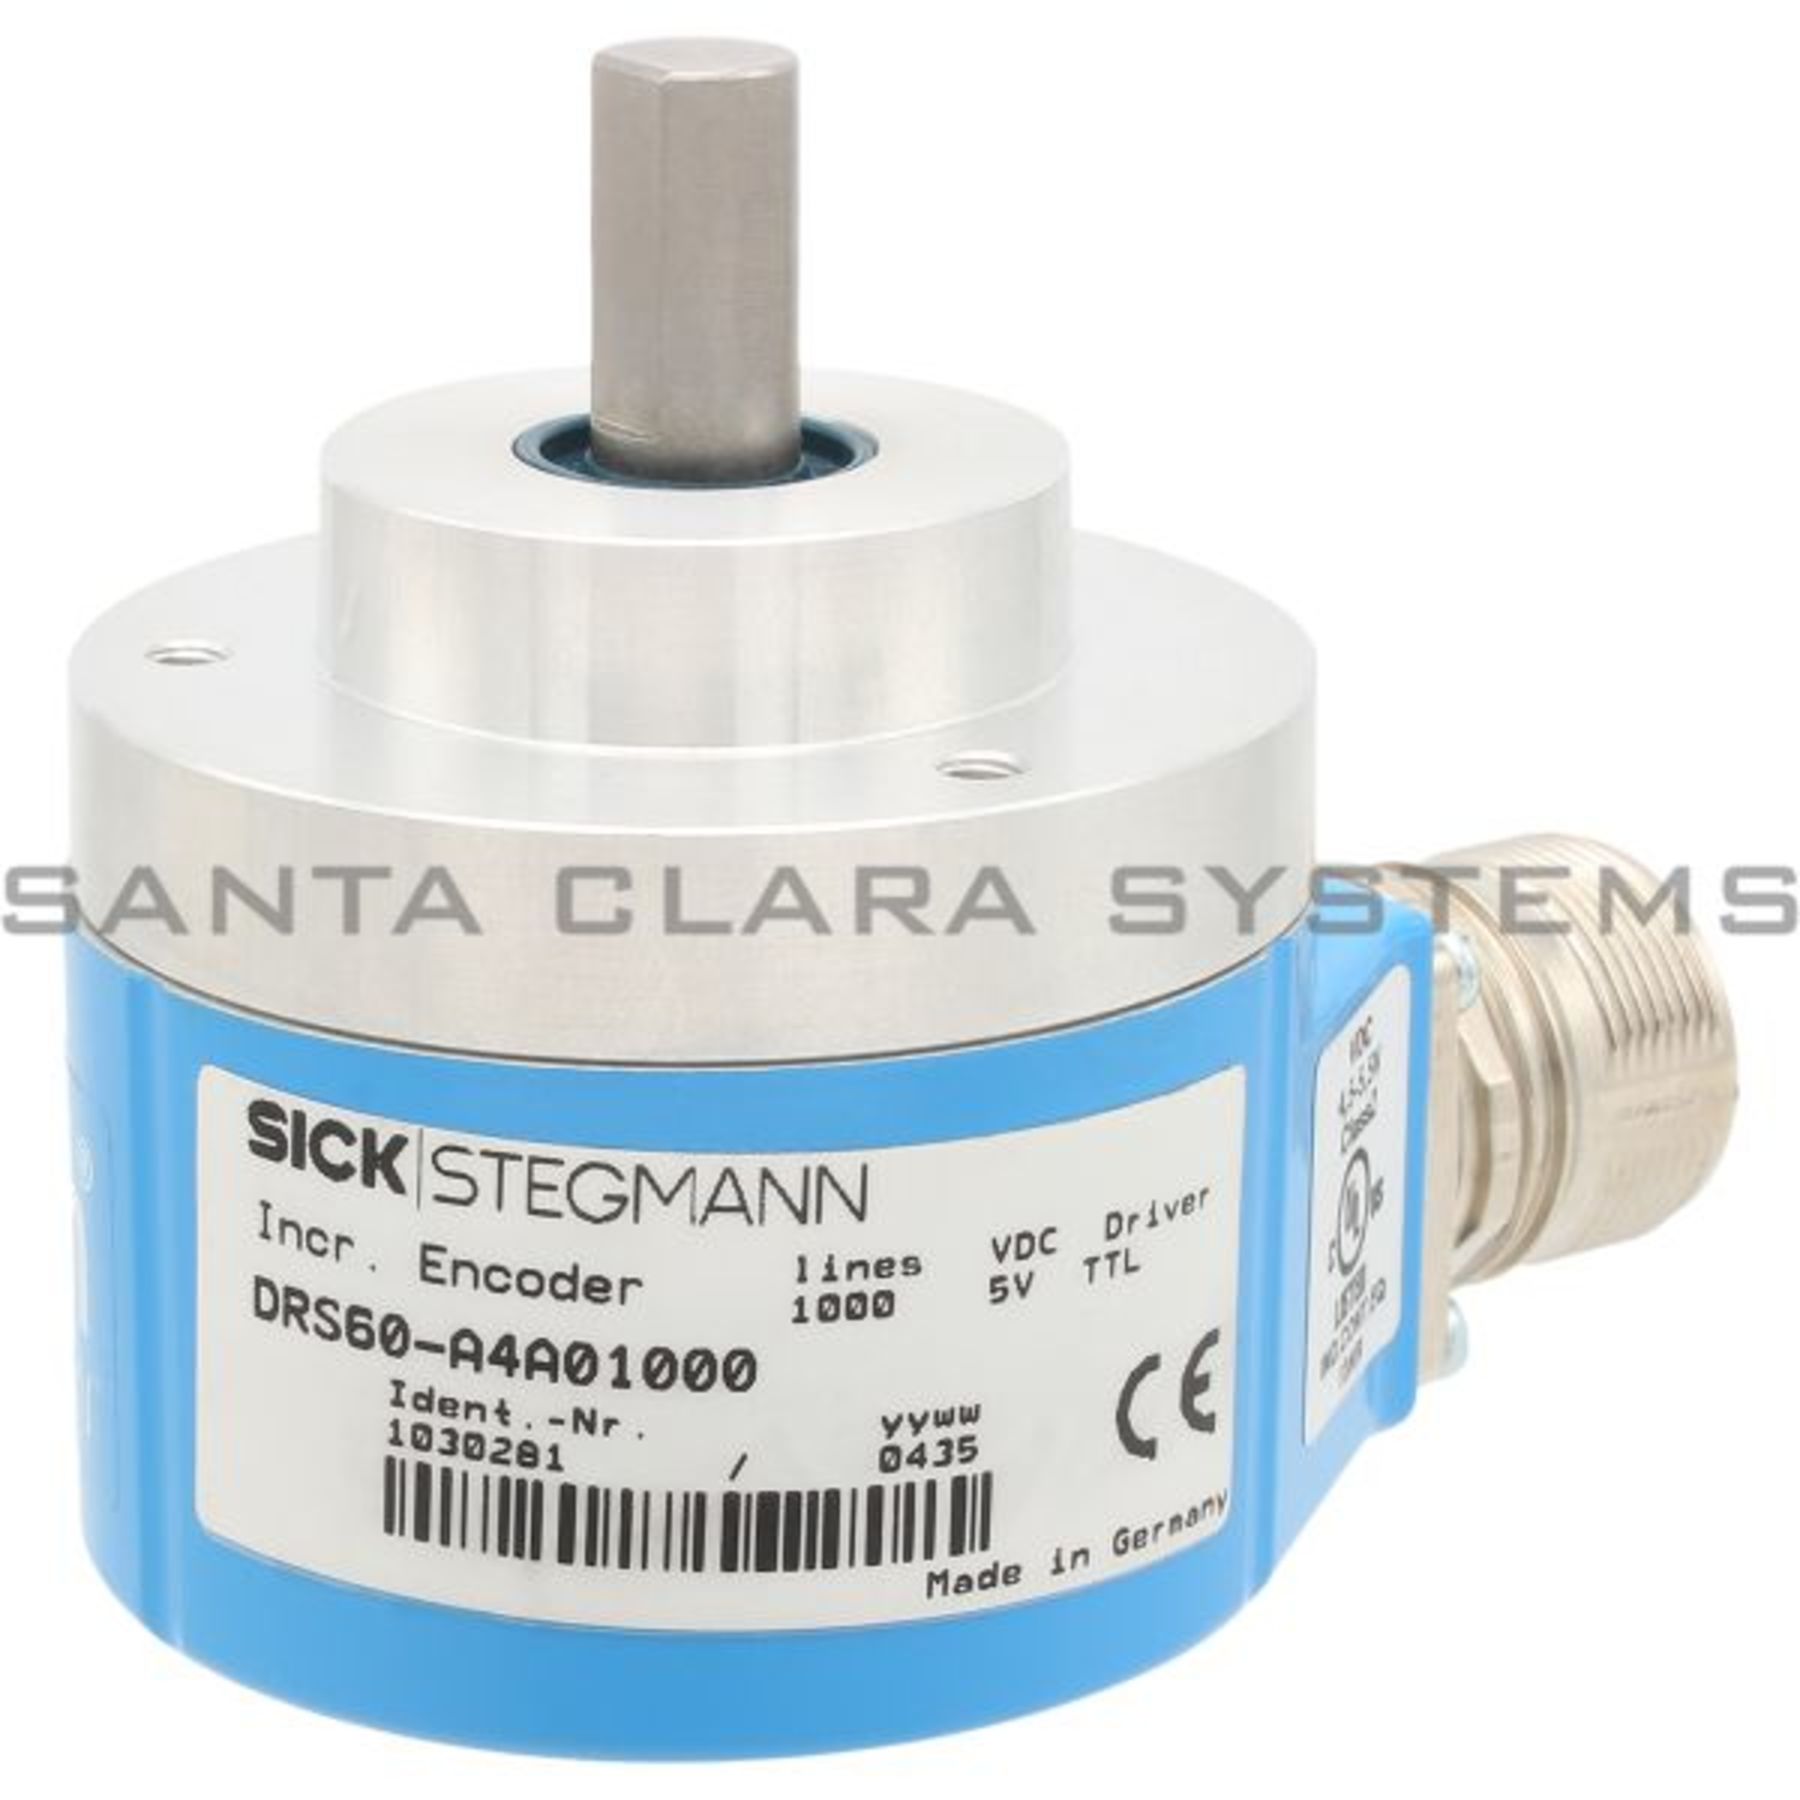 DRS60-A4A01000 Sick Incremental Encoder | 1030201 - Santa Clara